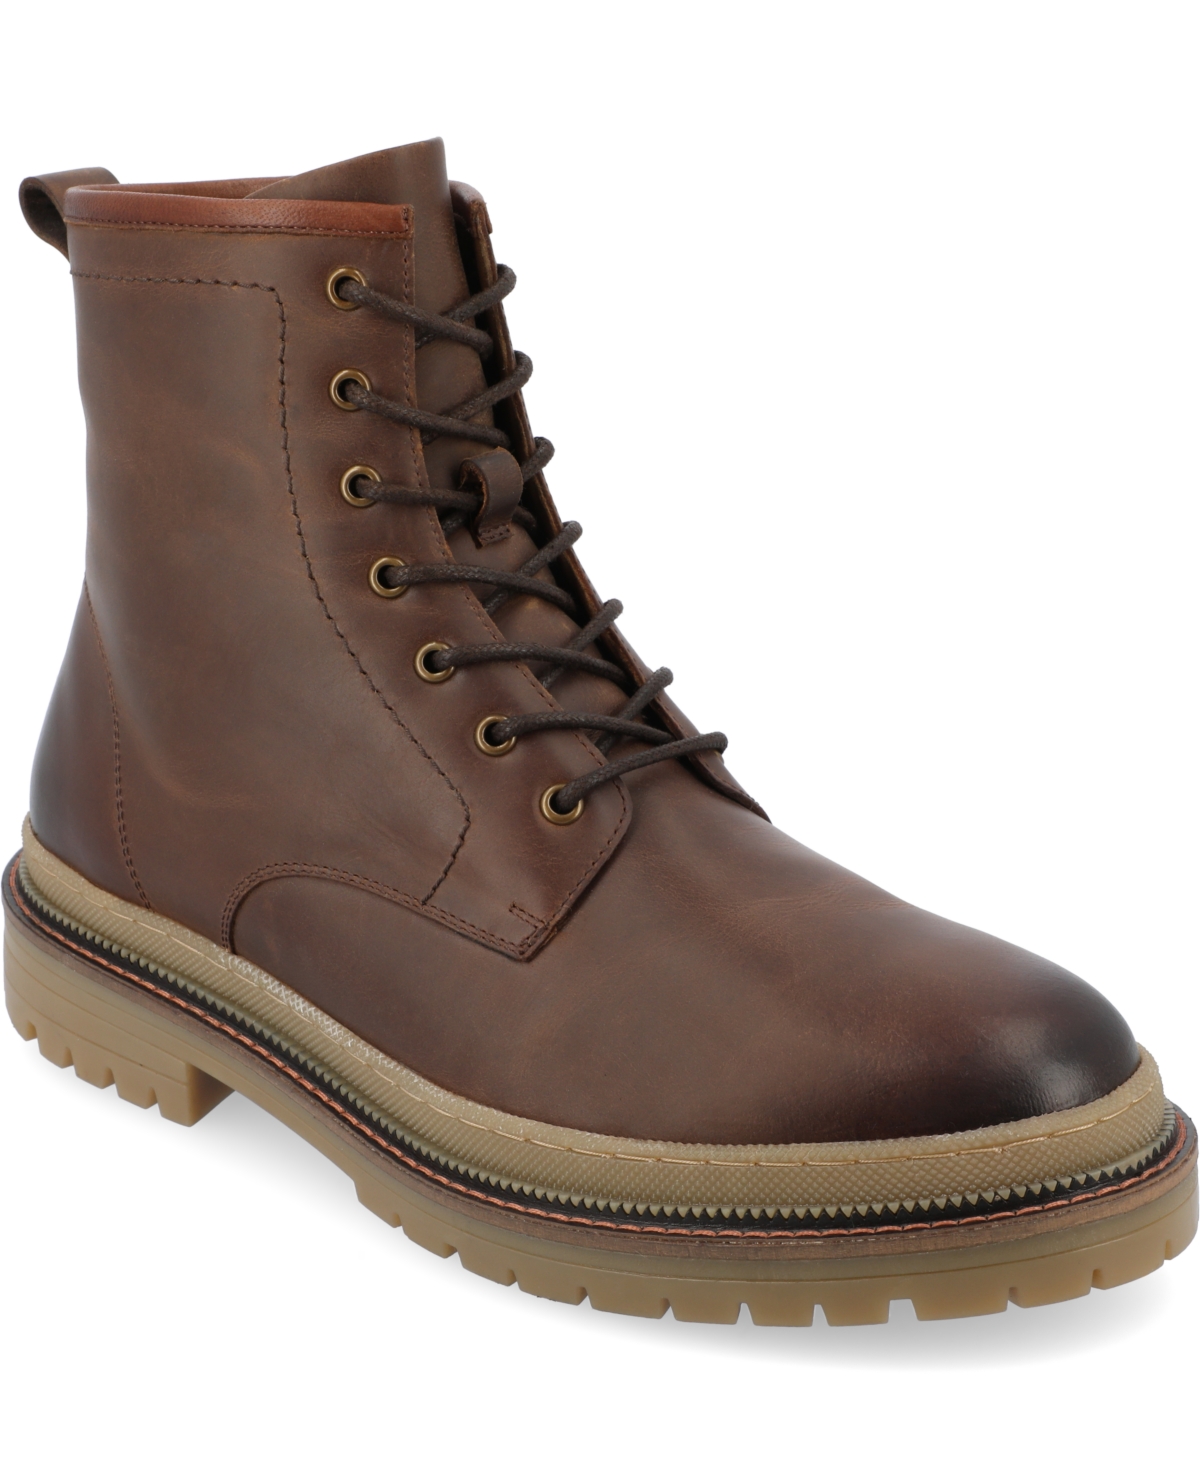 Men's Deegan Tru Comfort Foam Plain Toe Ankle Boots - Brown